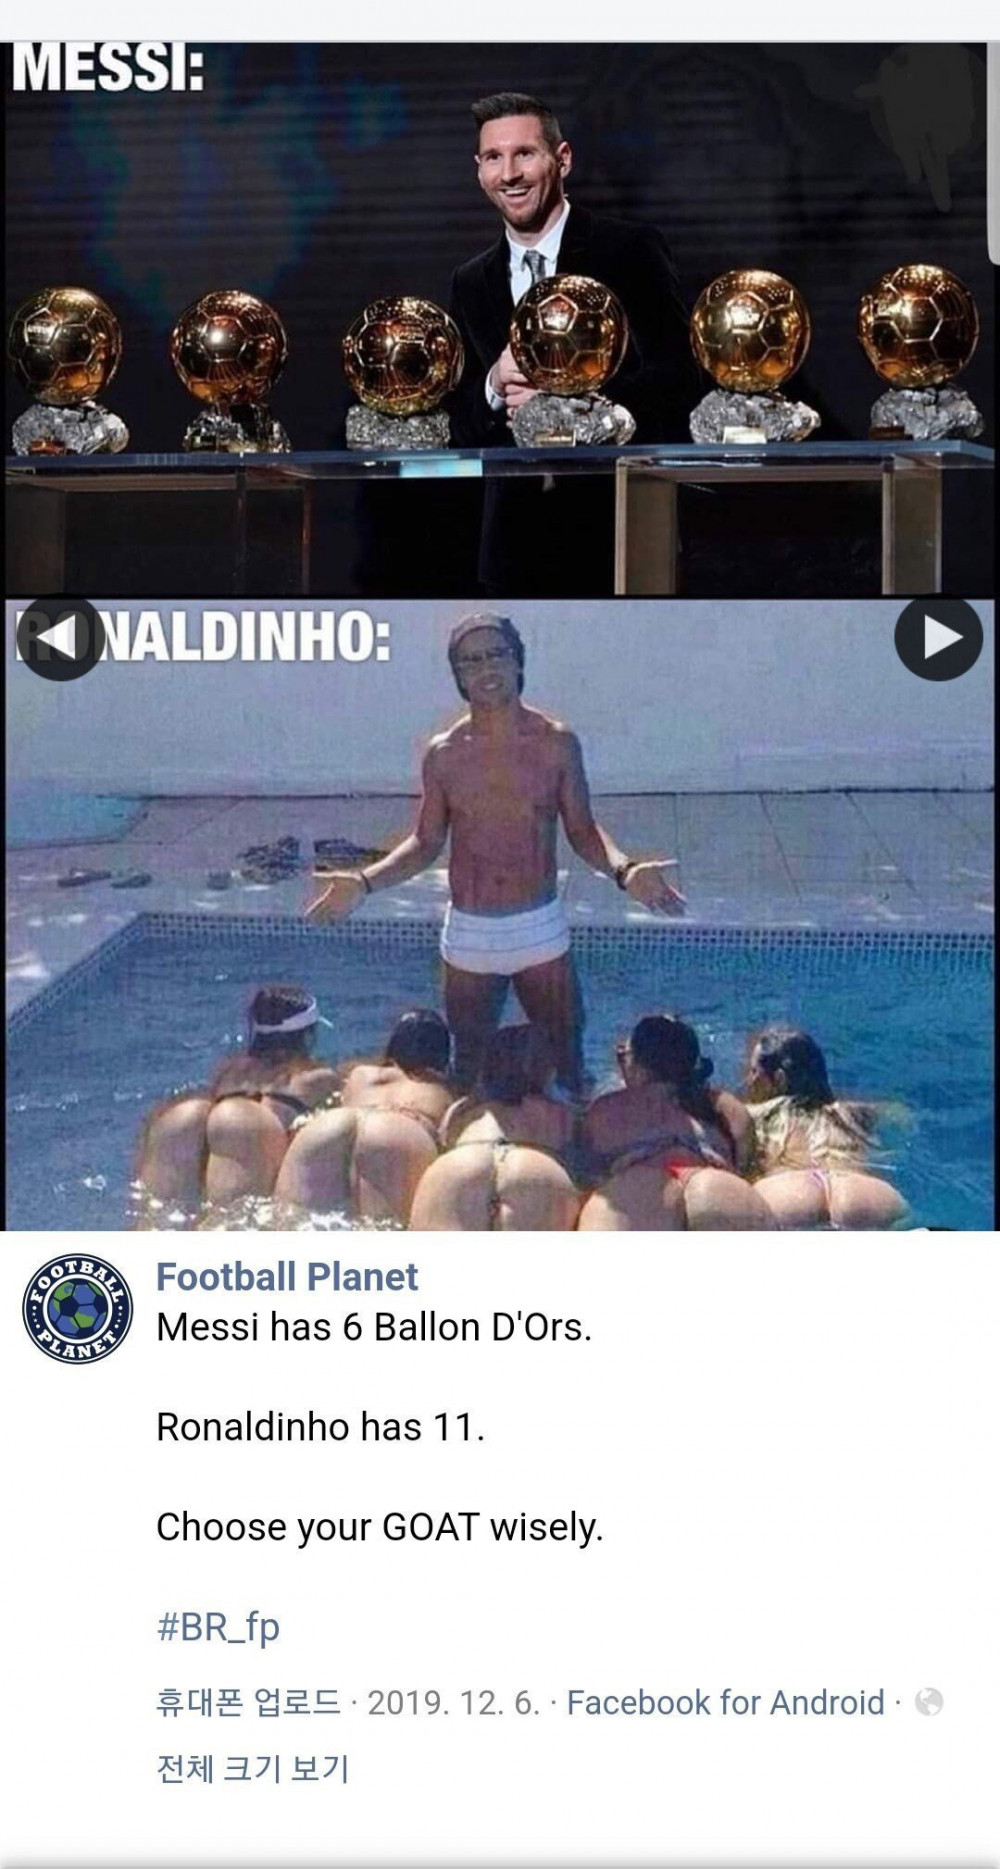 The reason why it's still Ronaldinho >> Messi